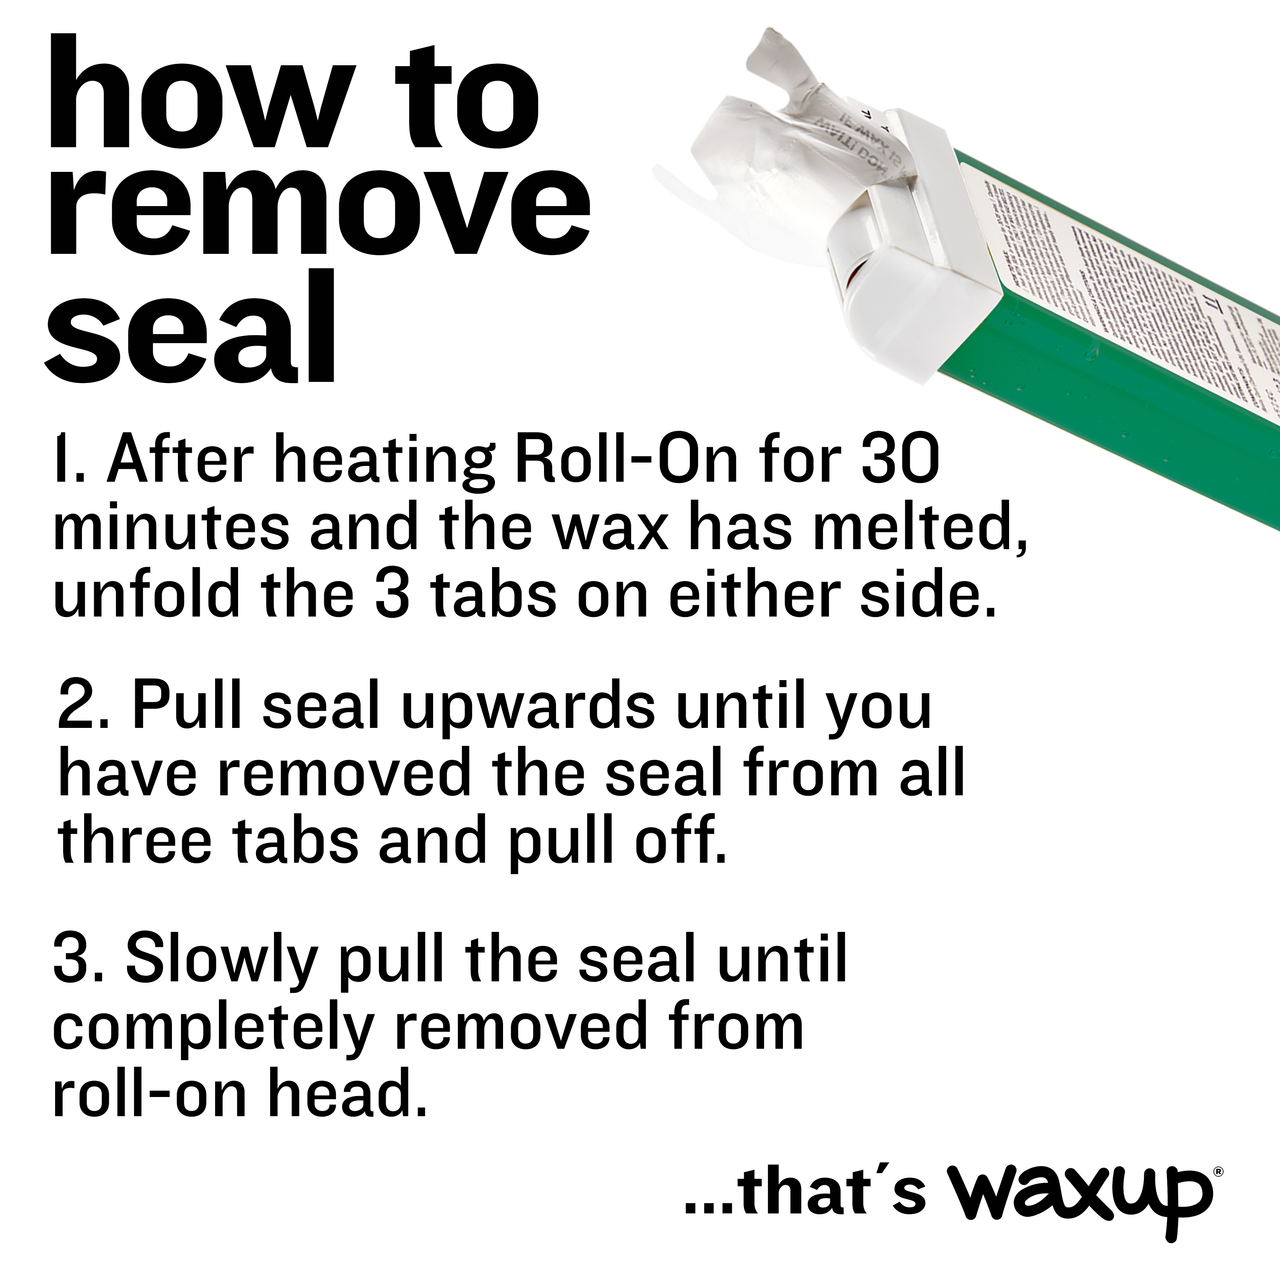 Aloe Vera Roll On Wax Cartridges 4 Pack - thatswaxup -  - Roll On Wax - waxup hair removal wax body waxing kit women and men professional waxing supplies